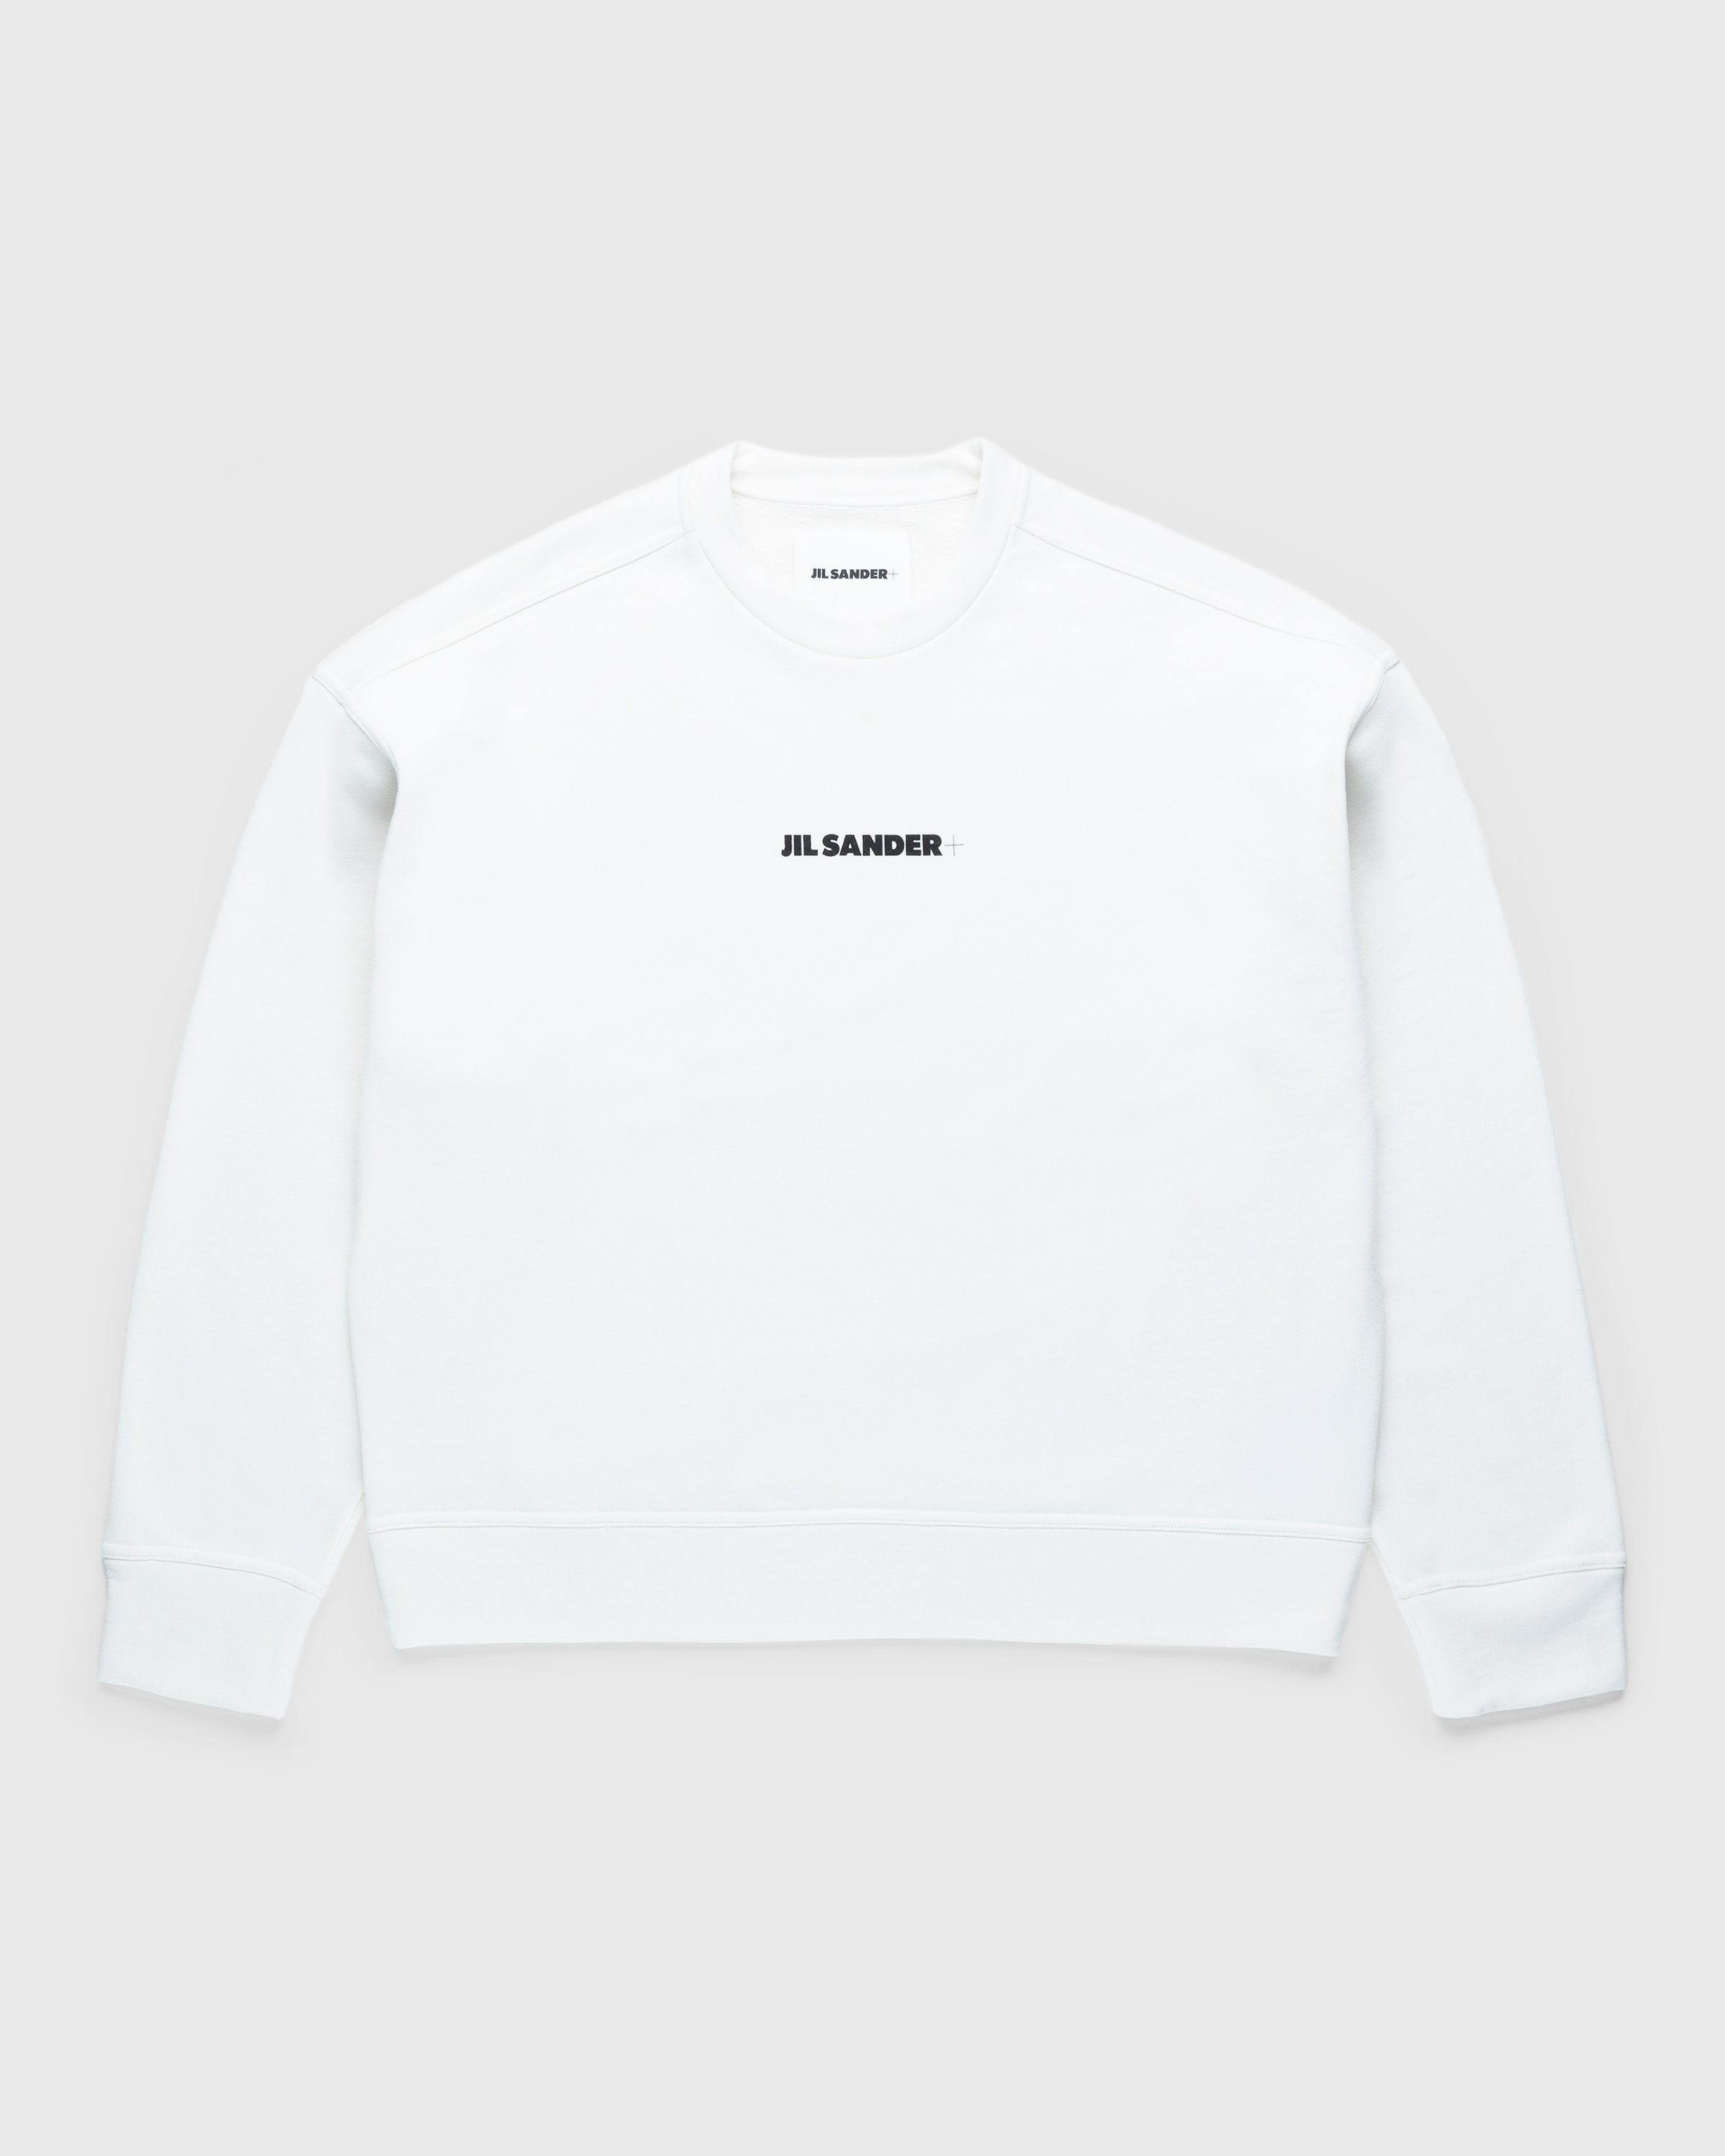 Jil Sander – Logo Sweatshirt Beige - Sweatshirts - Beige - Image 1